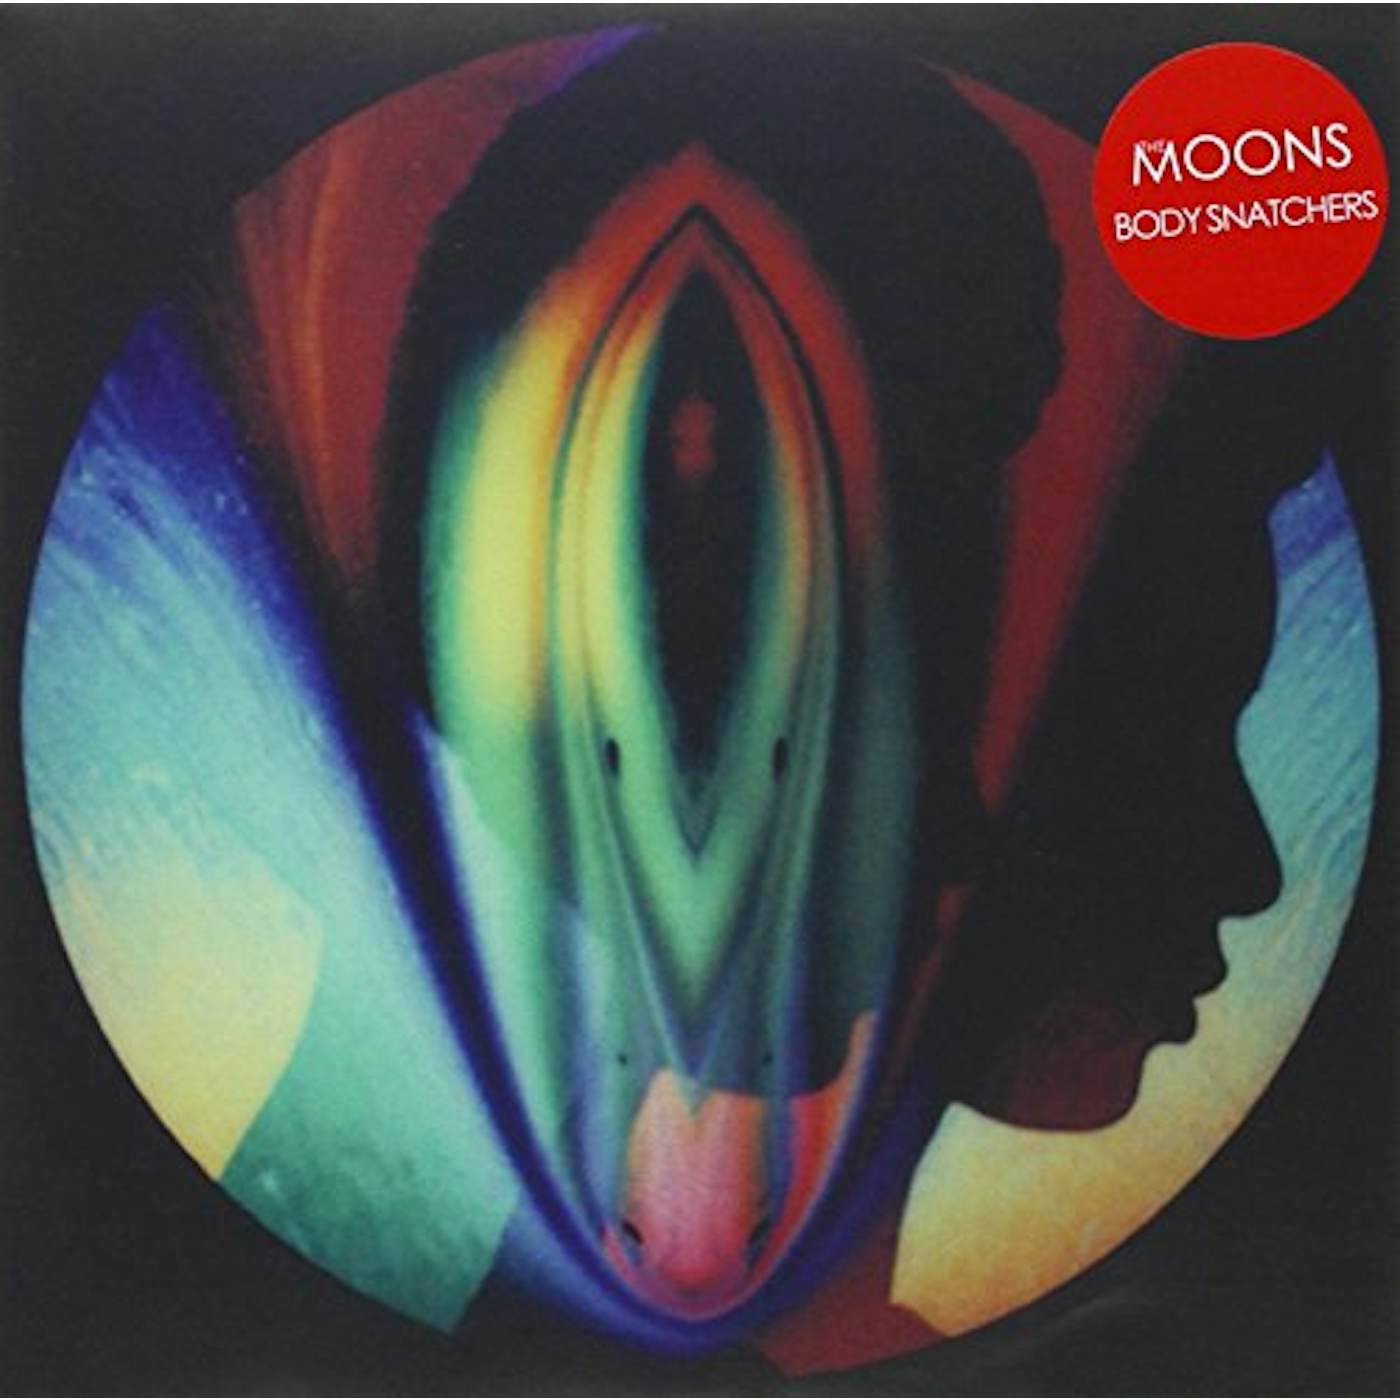 Moons Body Snatchers Vinyl Record